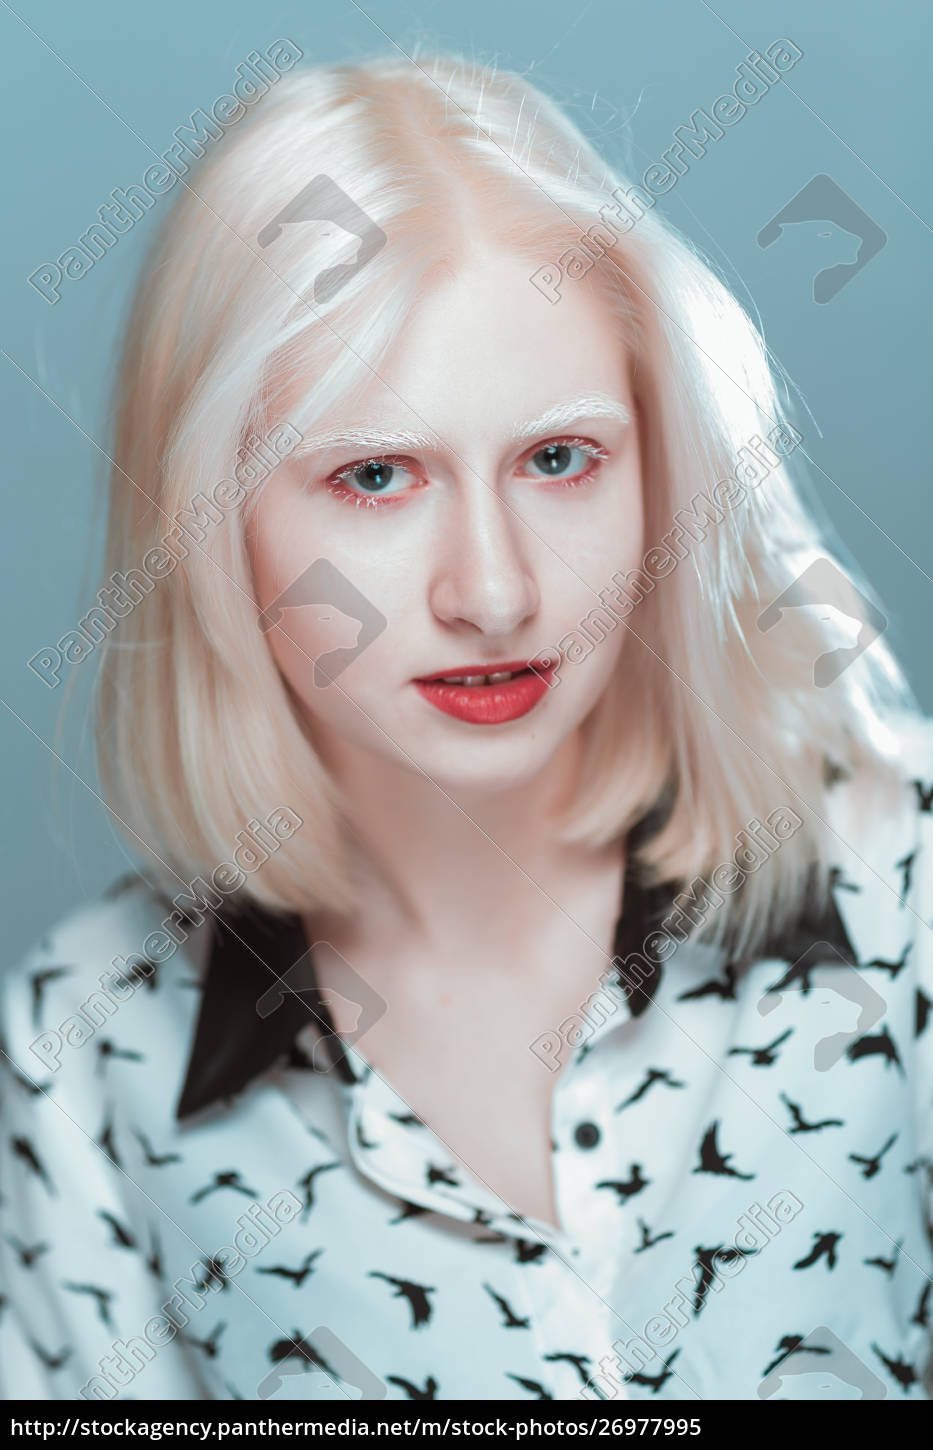 retrato de chica rubia albina en estudio - Stockphoto #26977995 | Agencia  de stock PantherMedia